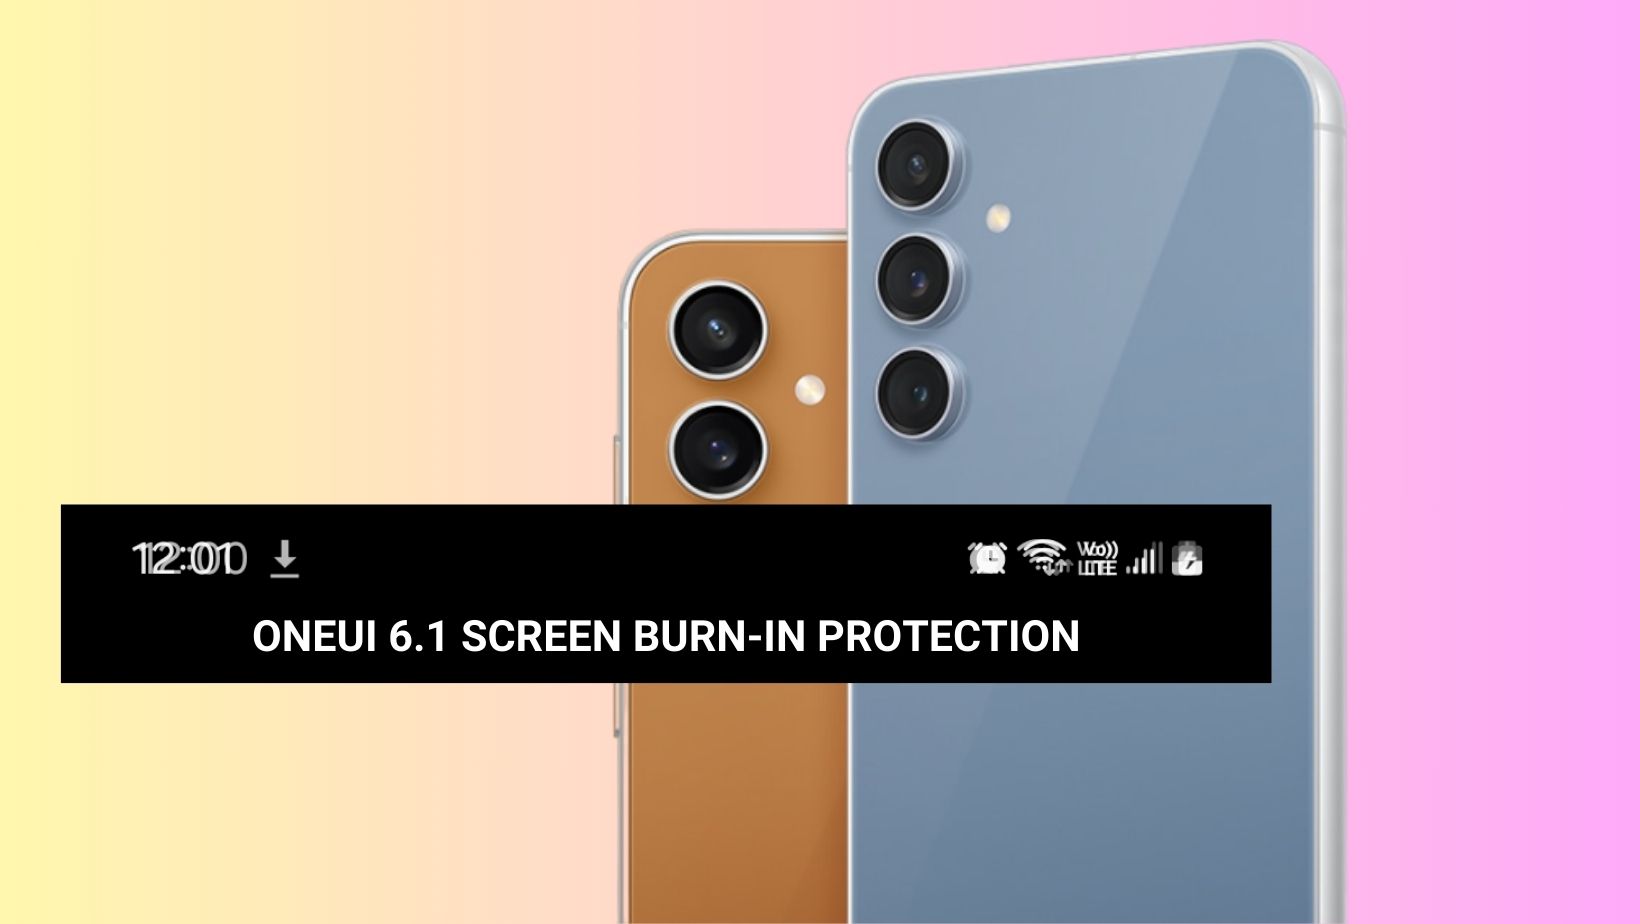 ONE UI 6.1 Screen Burn-in Protection